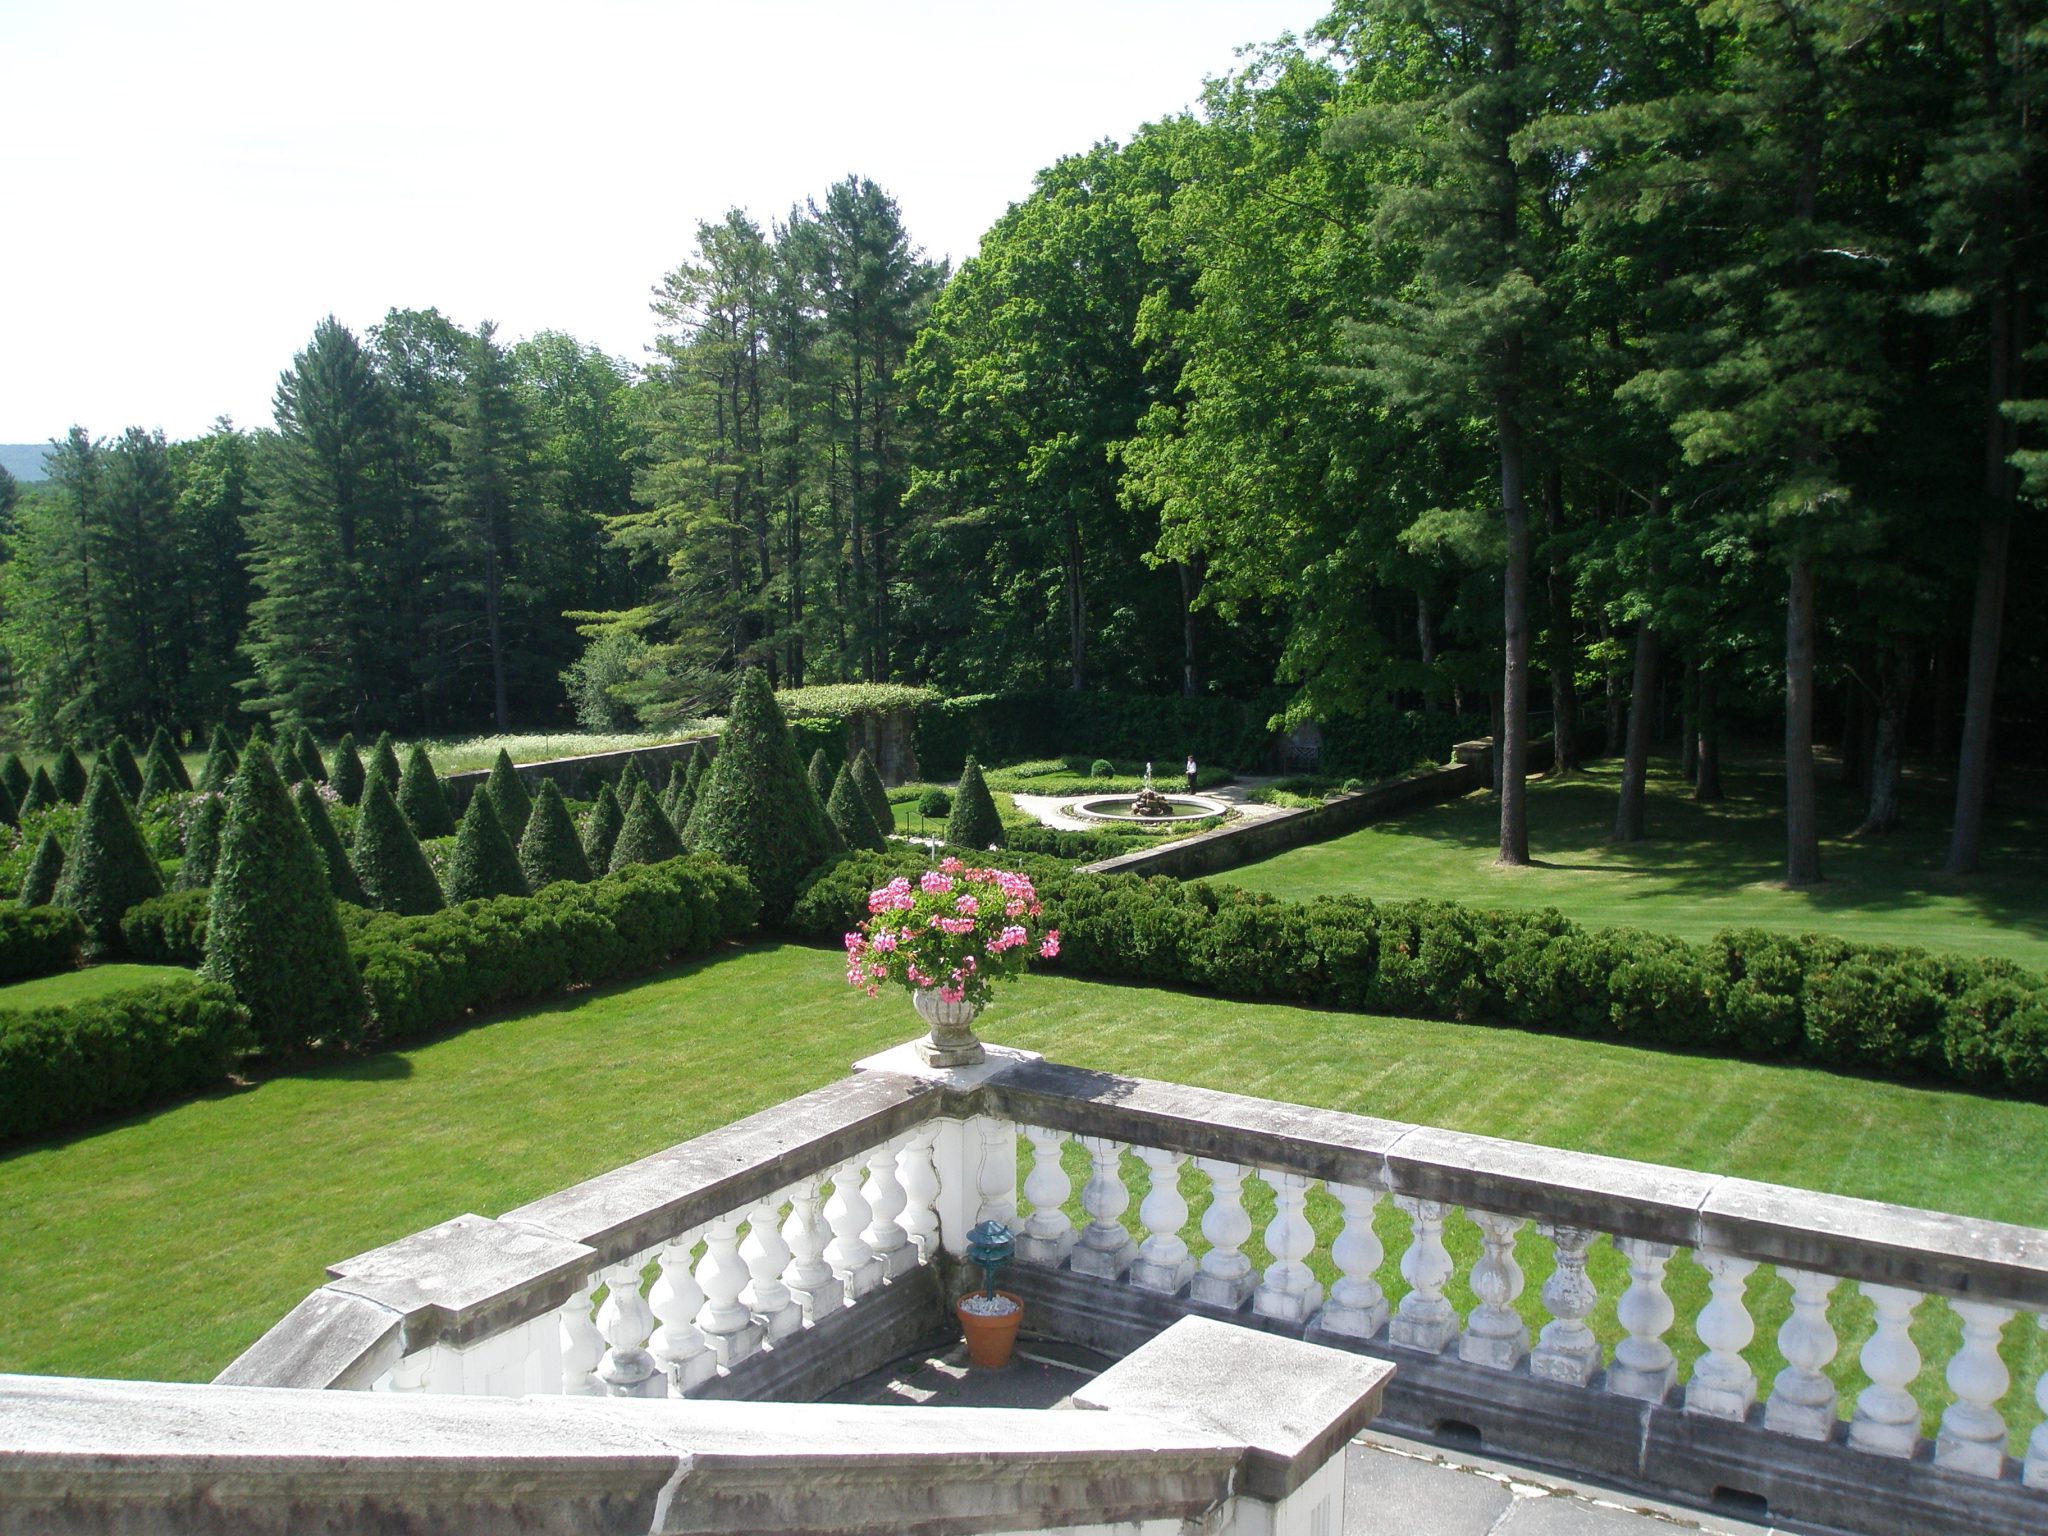 View from Terrace, down toward Walled Garden